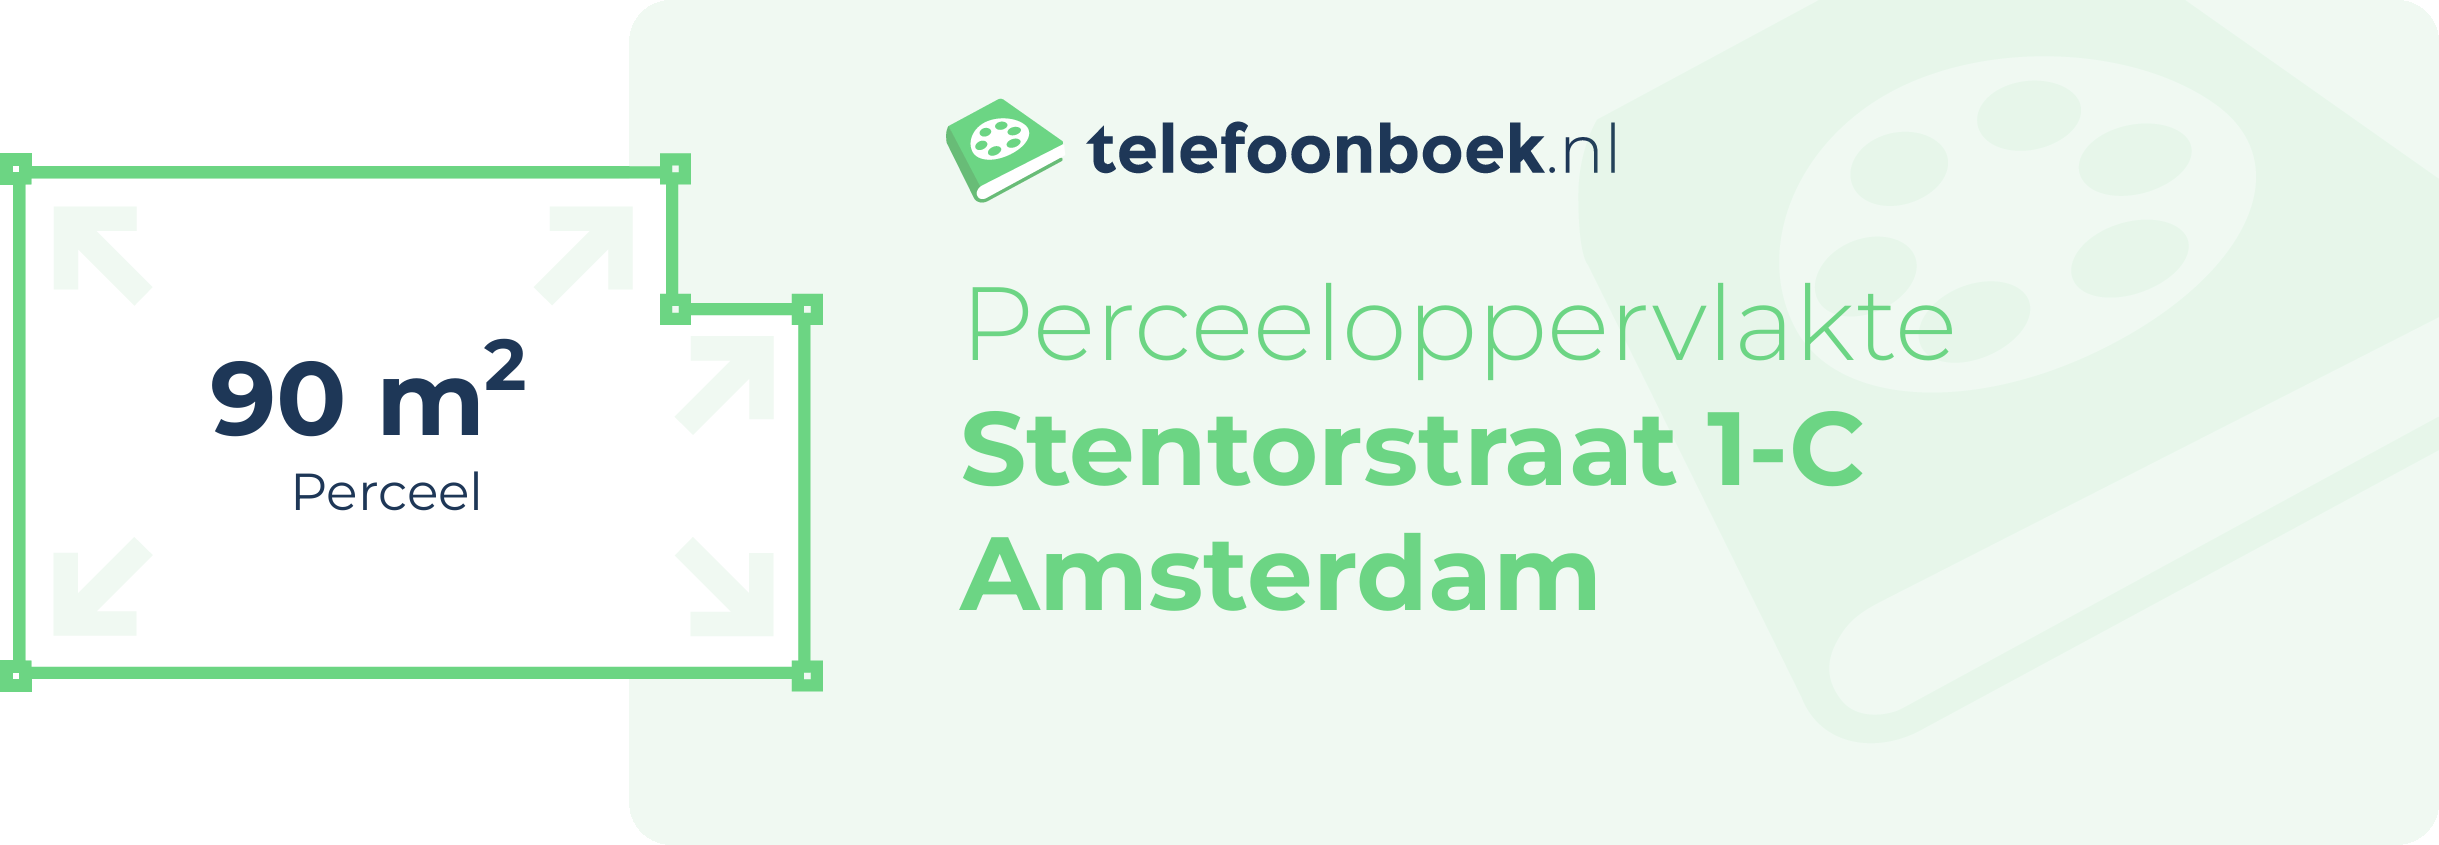 Perceeloppervlakte Stentorstraat 1-C Amsterdam